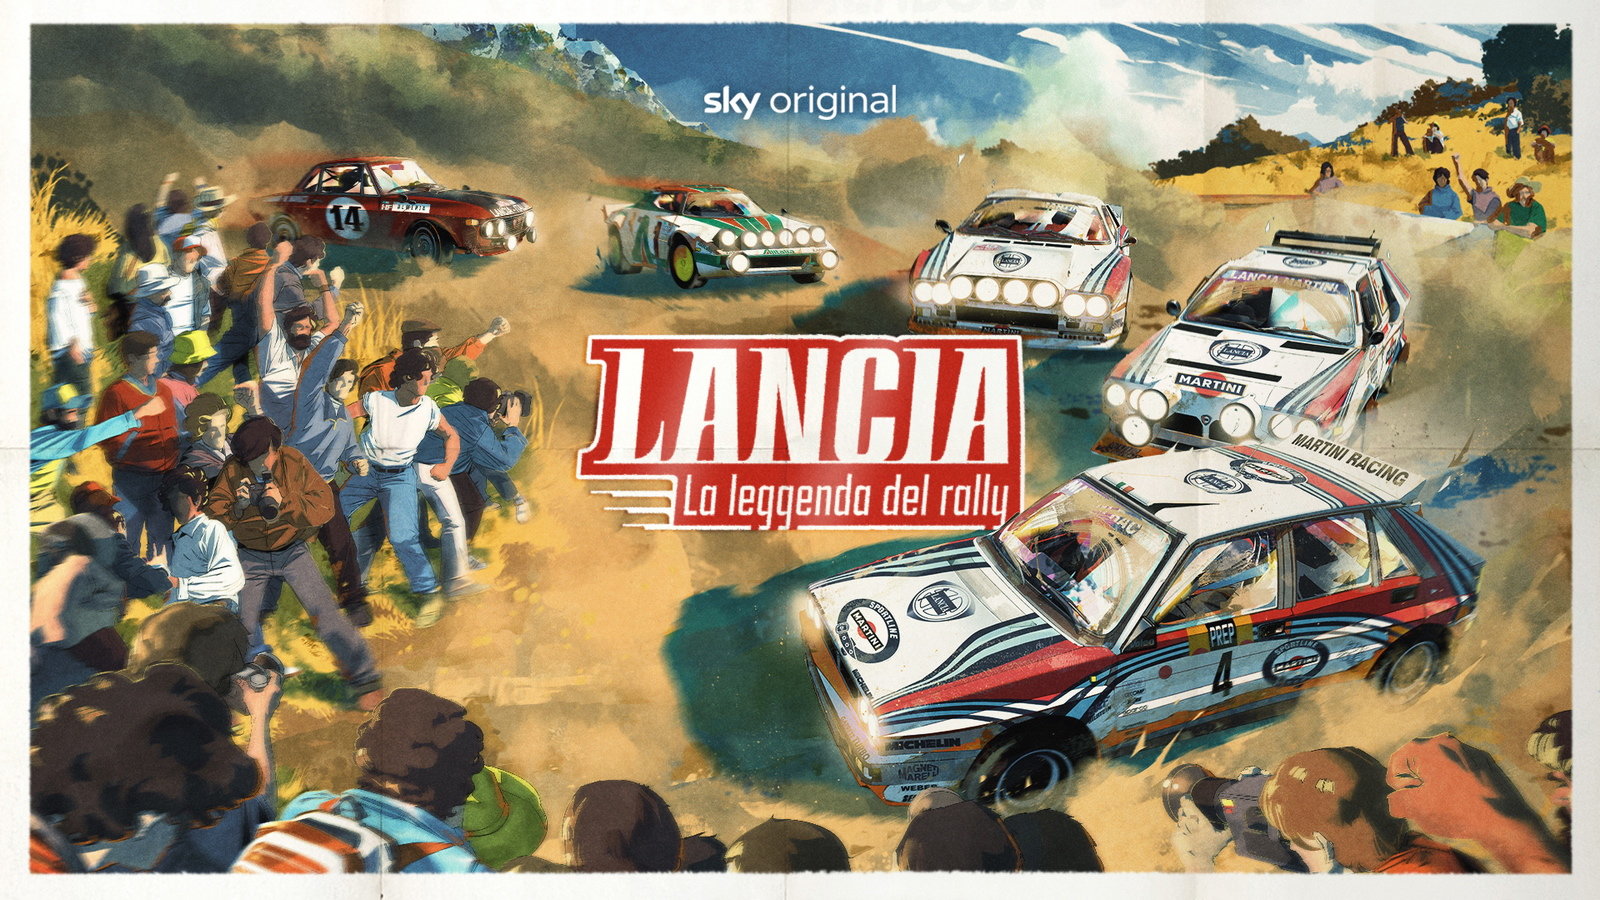 Throw.  The rally legend: the new Sky docu-series on the legendary Italian rally brand